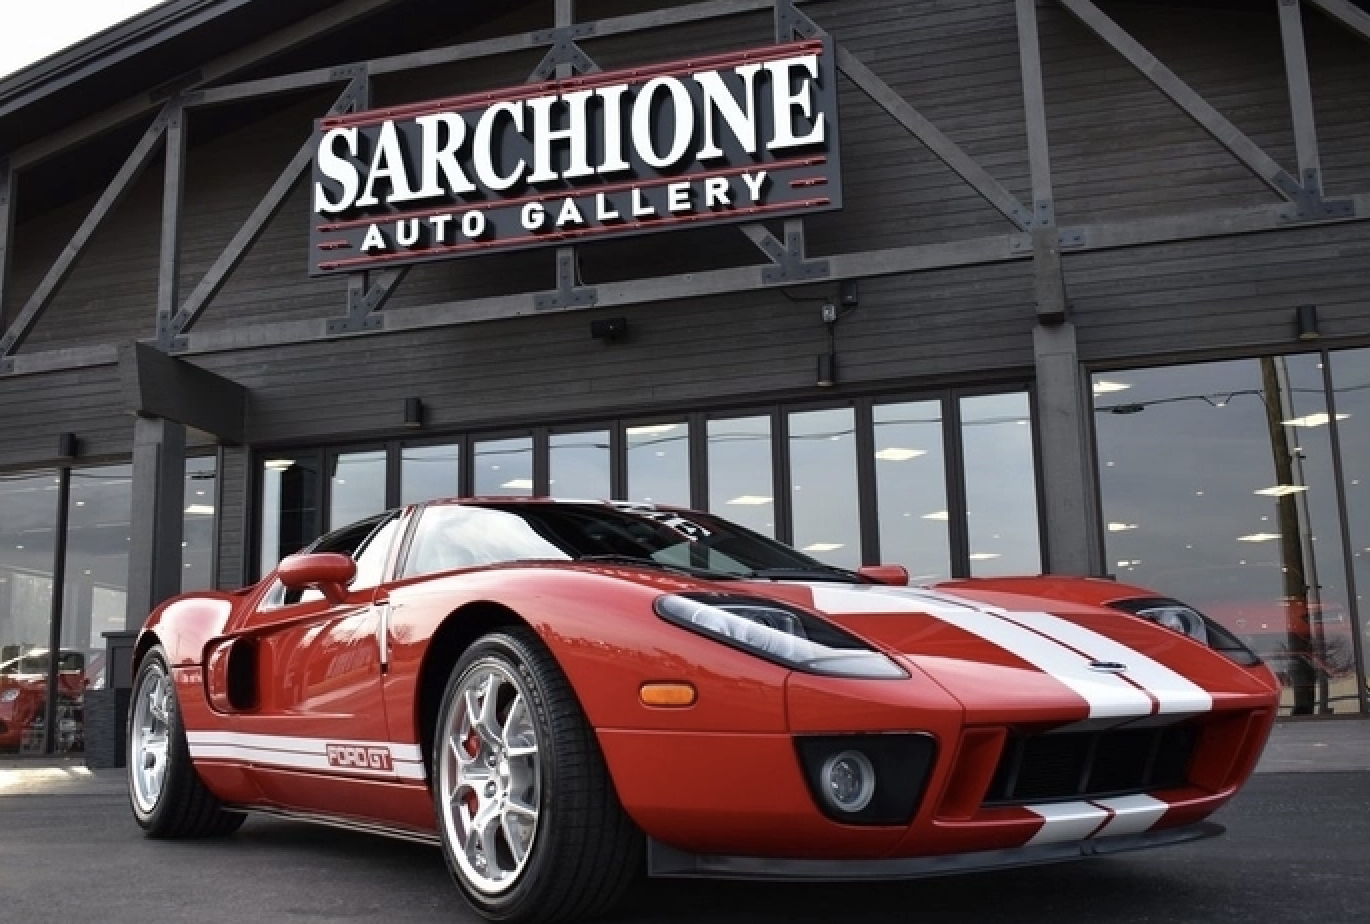 Sarchione Auto Gallery